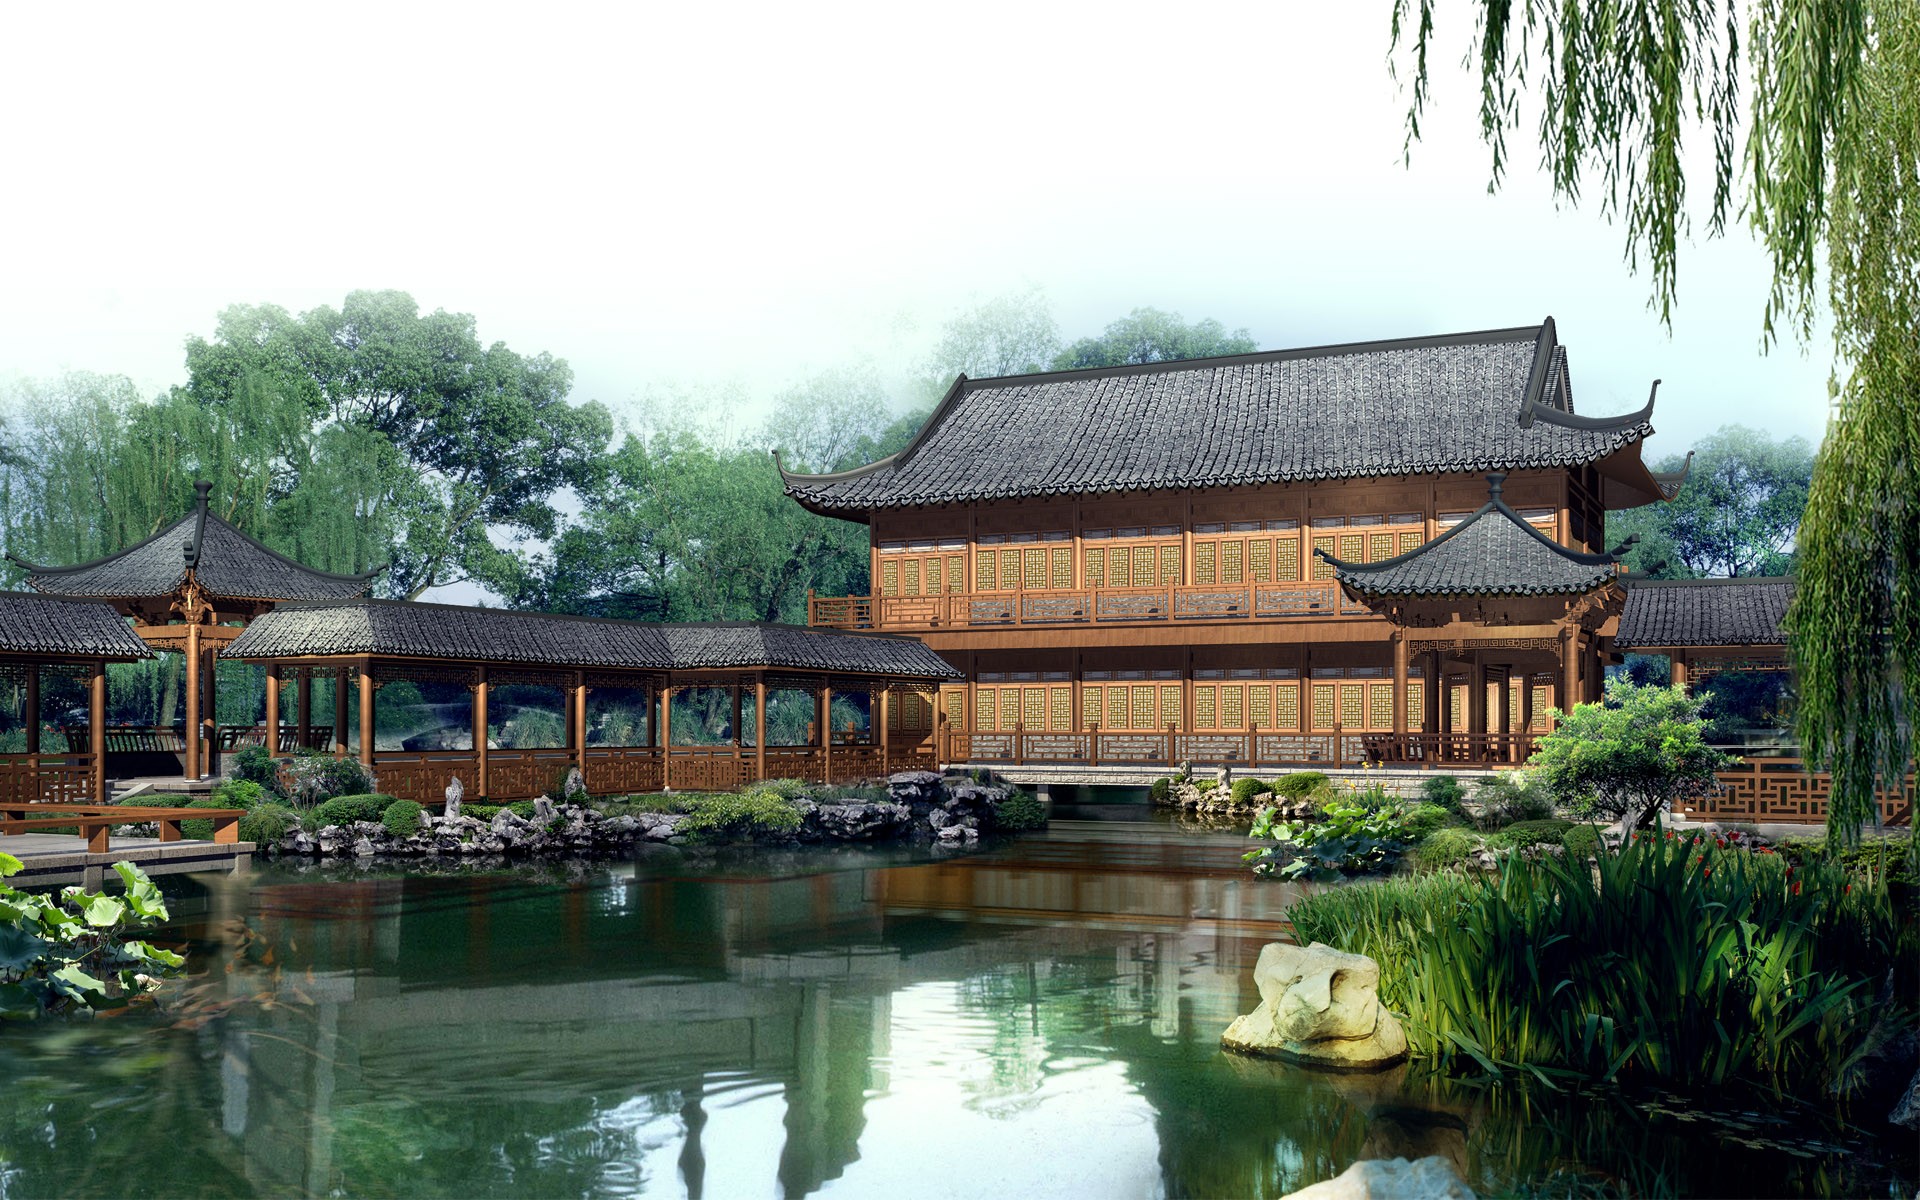 vegetation, artistic, oriental, building, garden, pagoda, pond, water